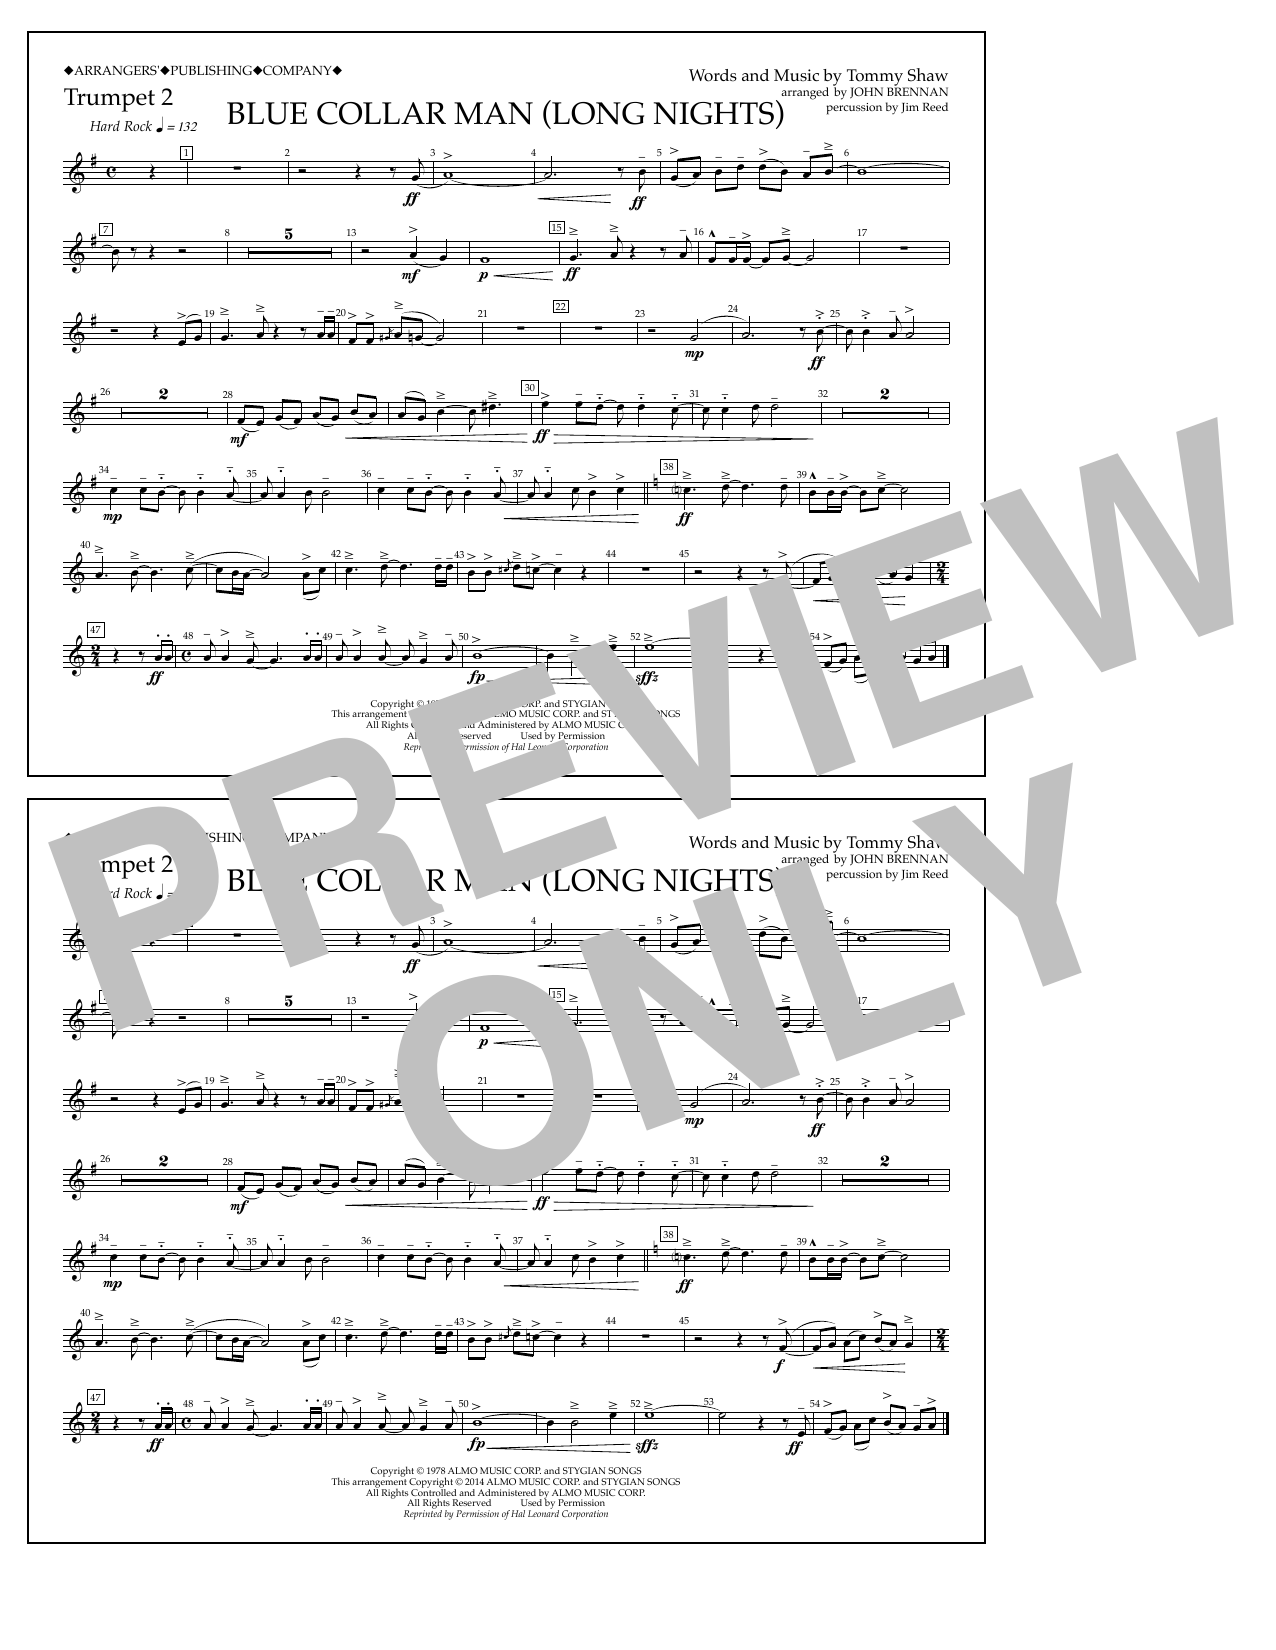 John Brennan Blue Collar Man (Long Nights) - Trumpet 2 Sheet Music Notes & Chords for Marching Band - Download or Print PDF